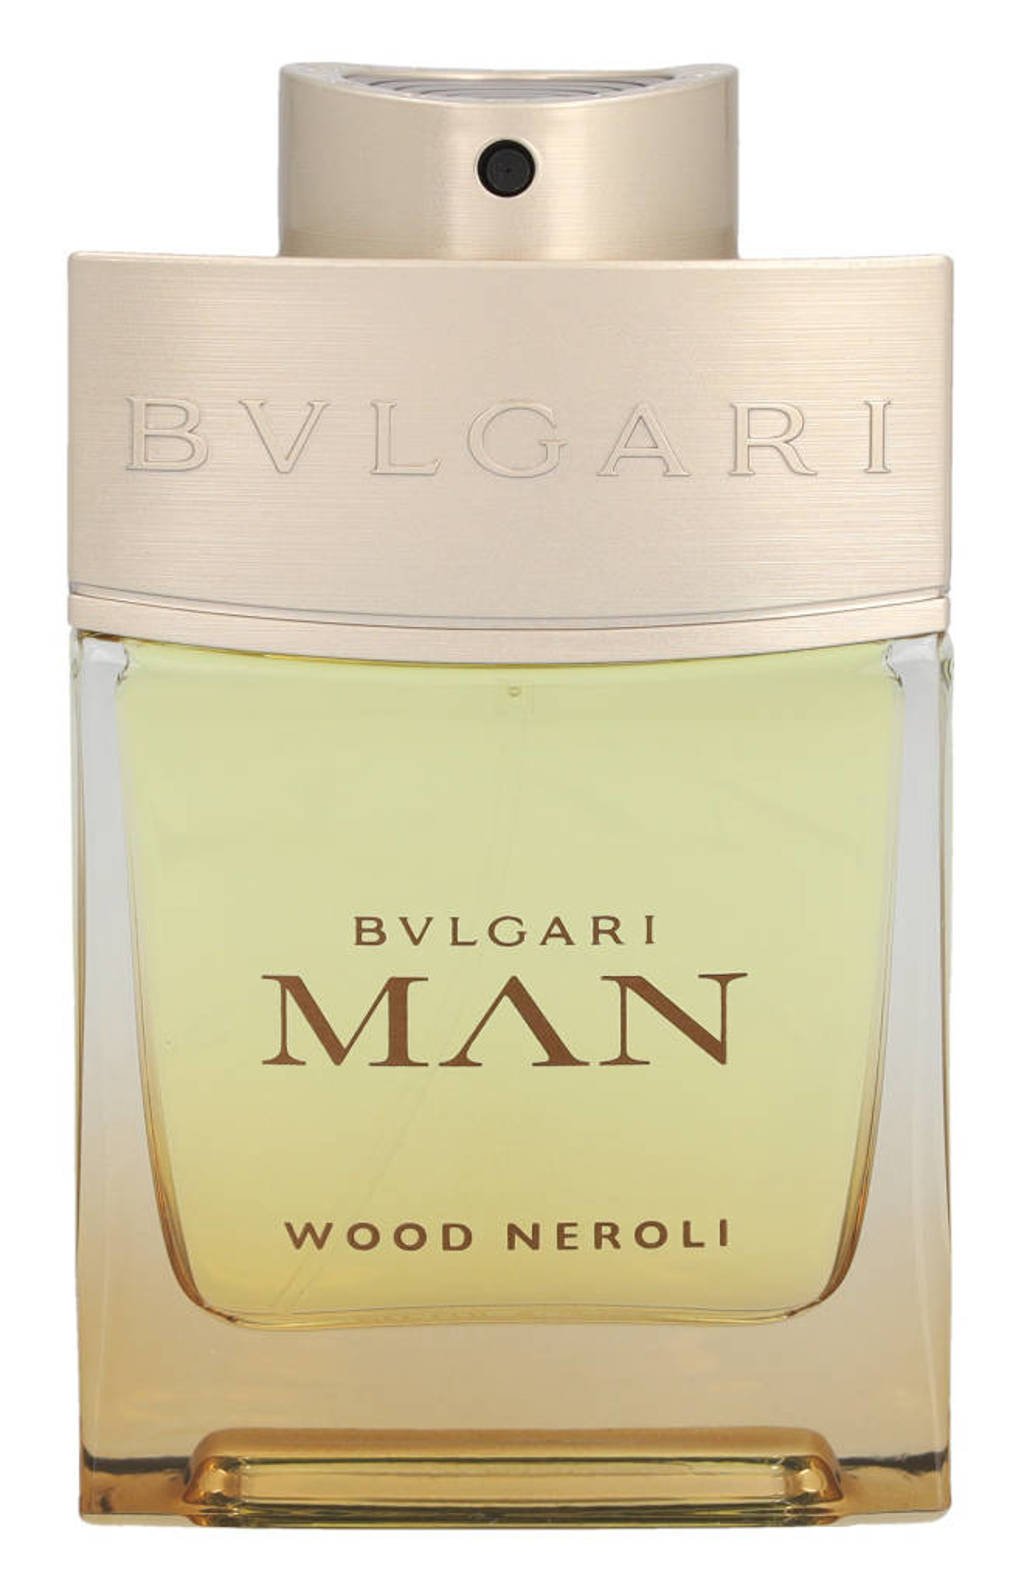 Bvlgari Bvlgari Man eau de parfum - 60 ml